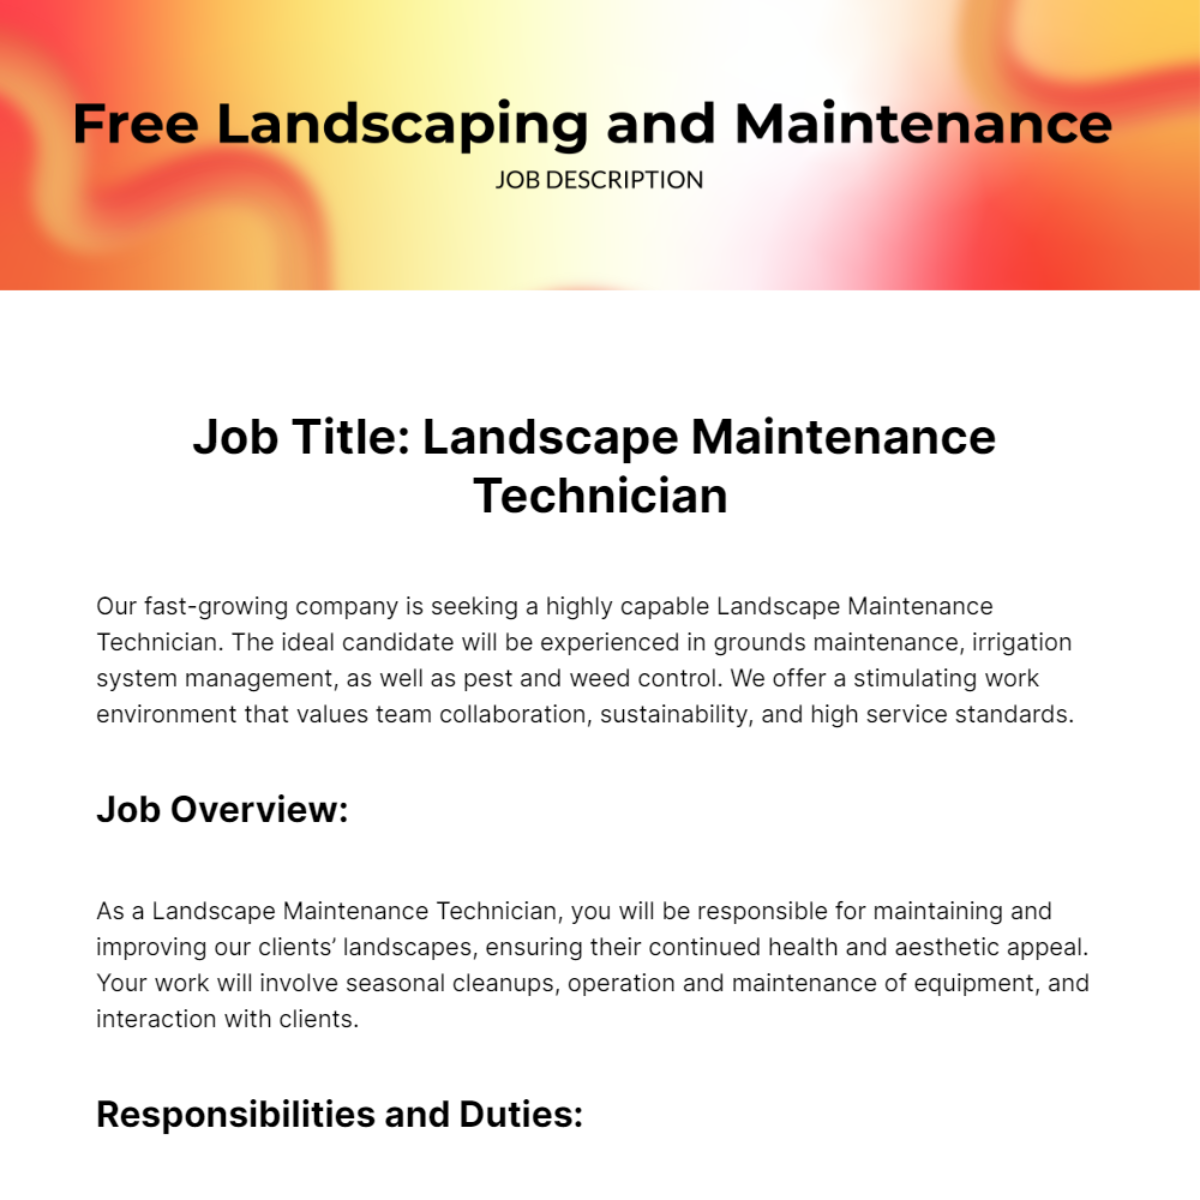 Free Landscaping and Maintenance Job Description Template